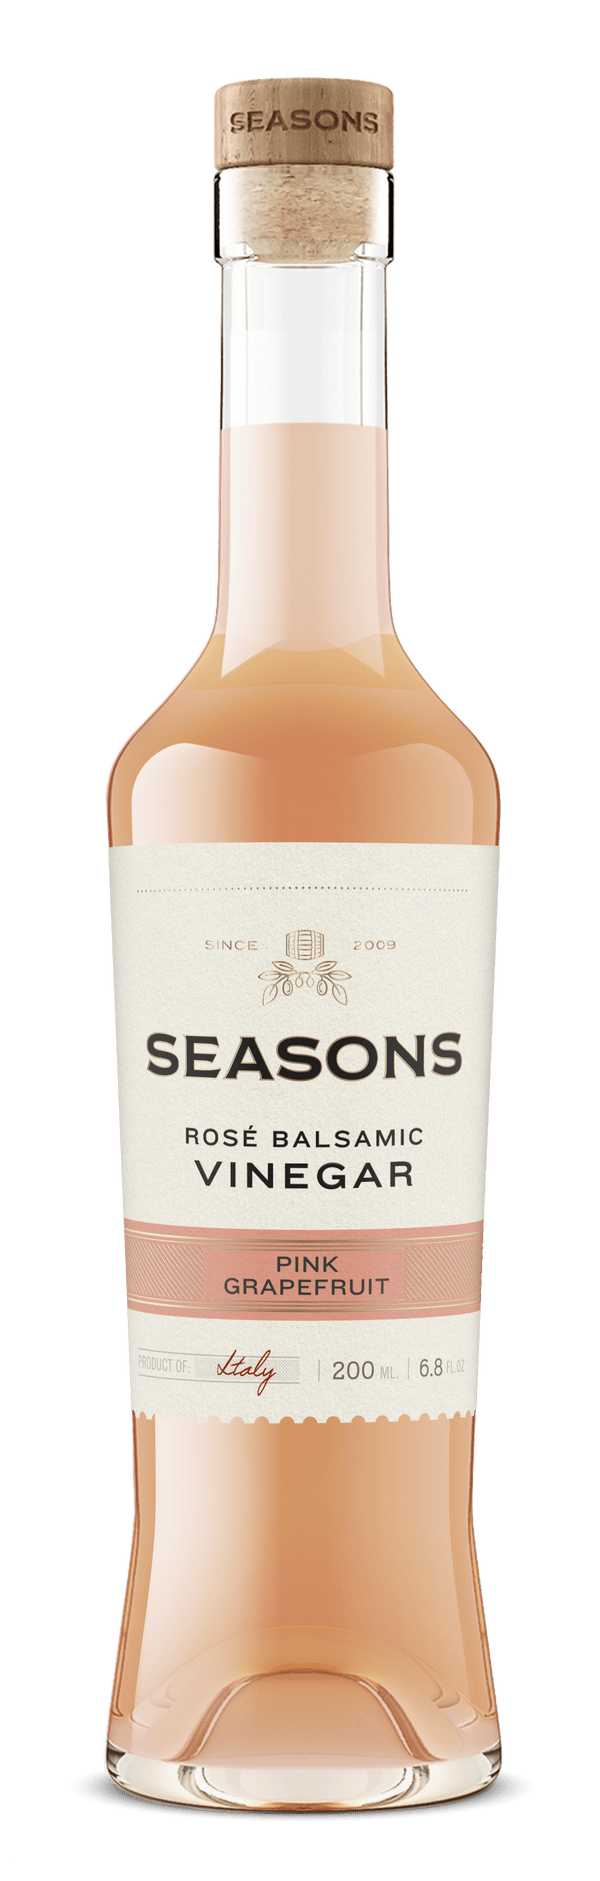 Seasons White Balsamic 375mL Pink Grapefruit